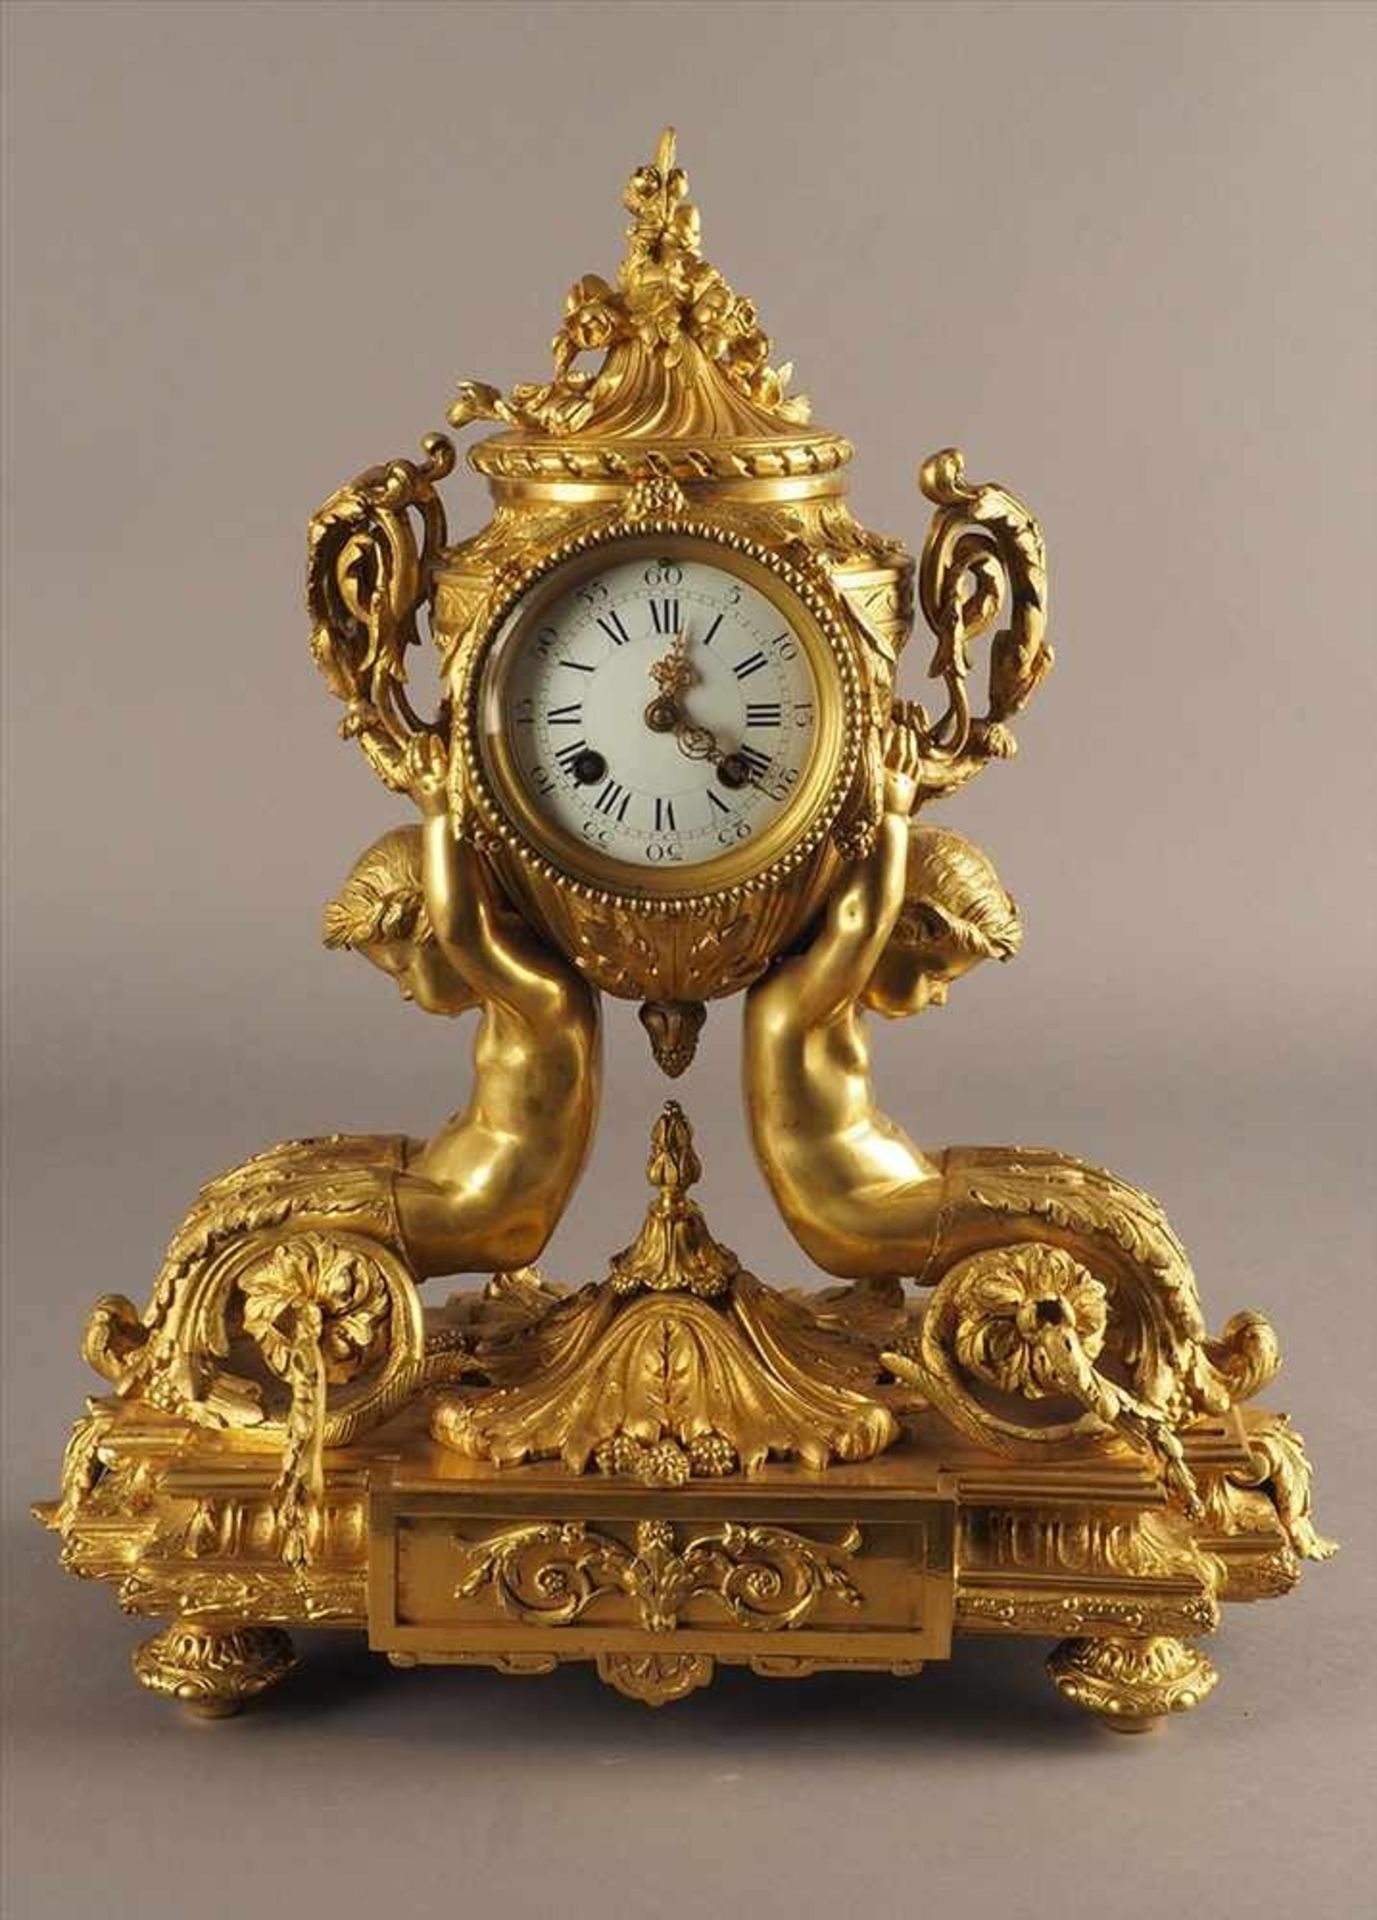 Feuervergoldete PrunkuhrVon Putten getragen, Bronze, feuervergoldet, 19.Jh., Pendel fehlt, Uhrwerk